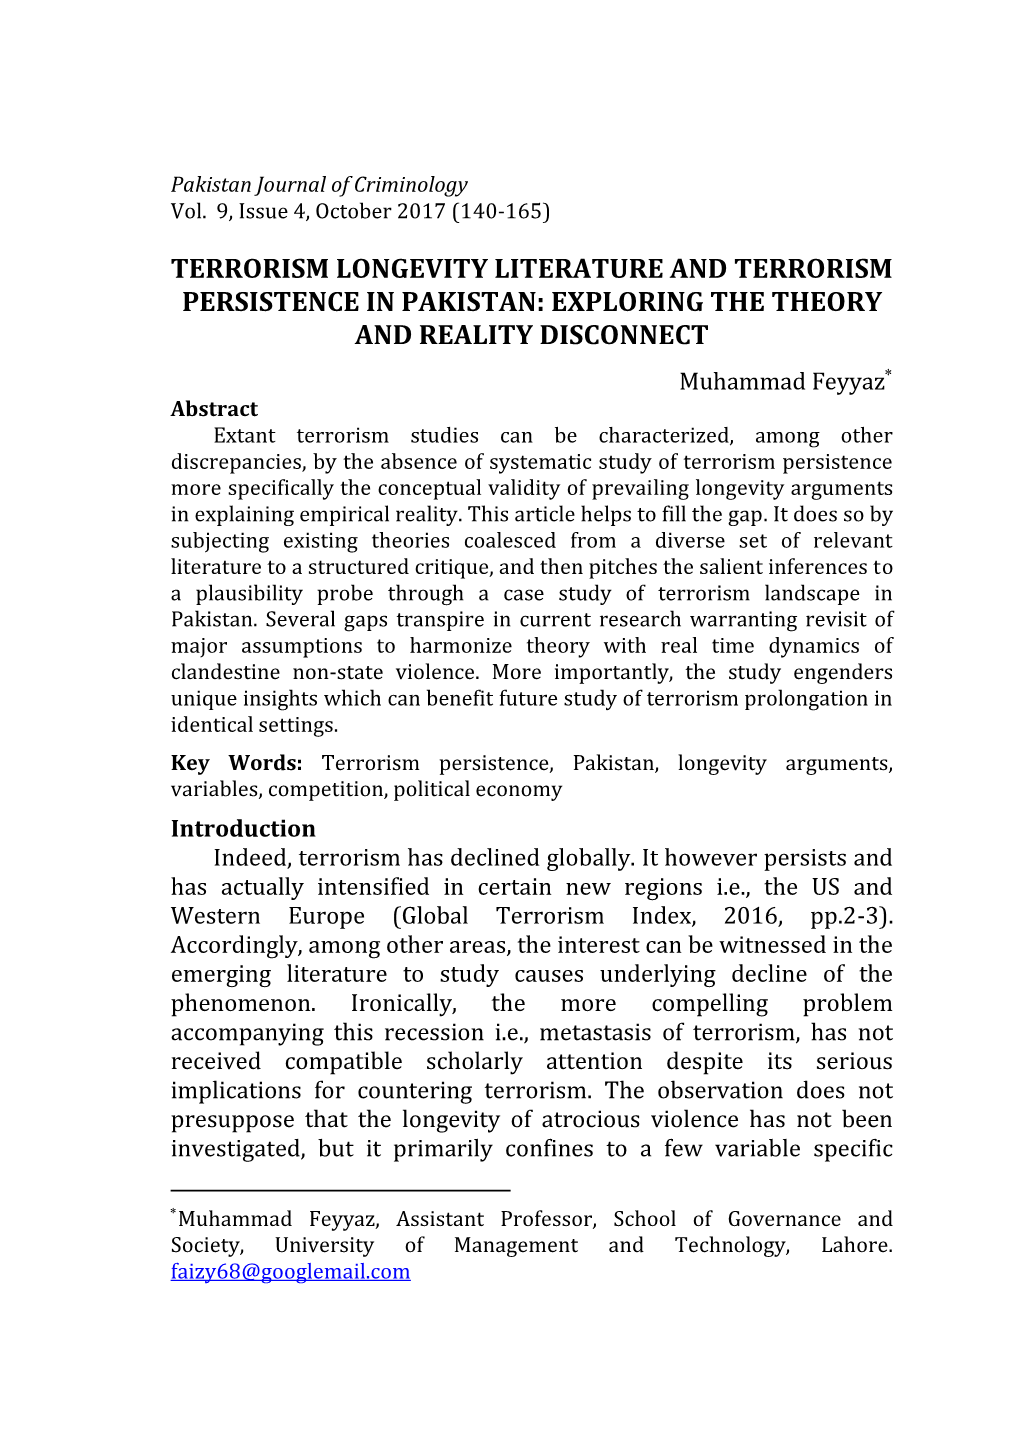 Terrorism Longevity Literature and Terrorism Persistence in Pakistan